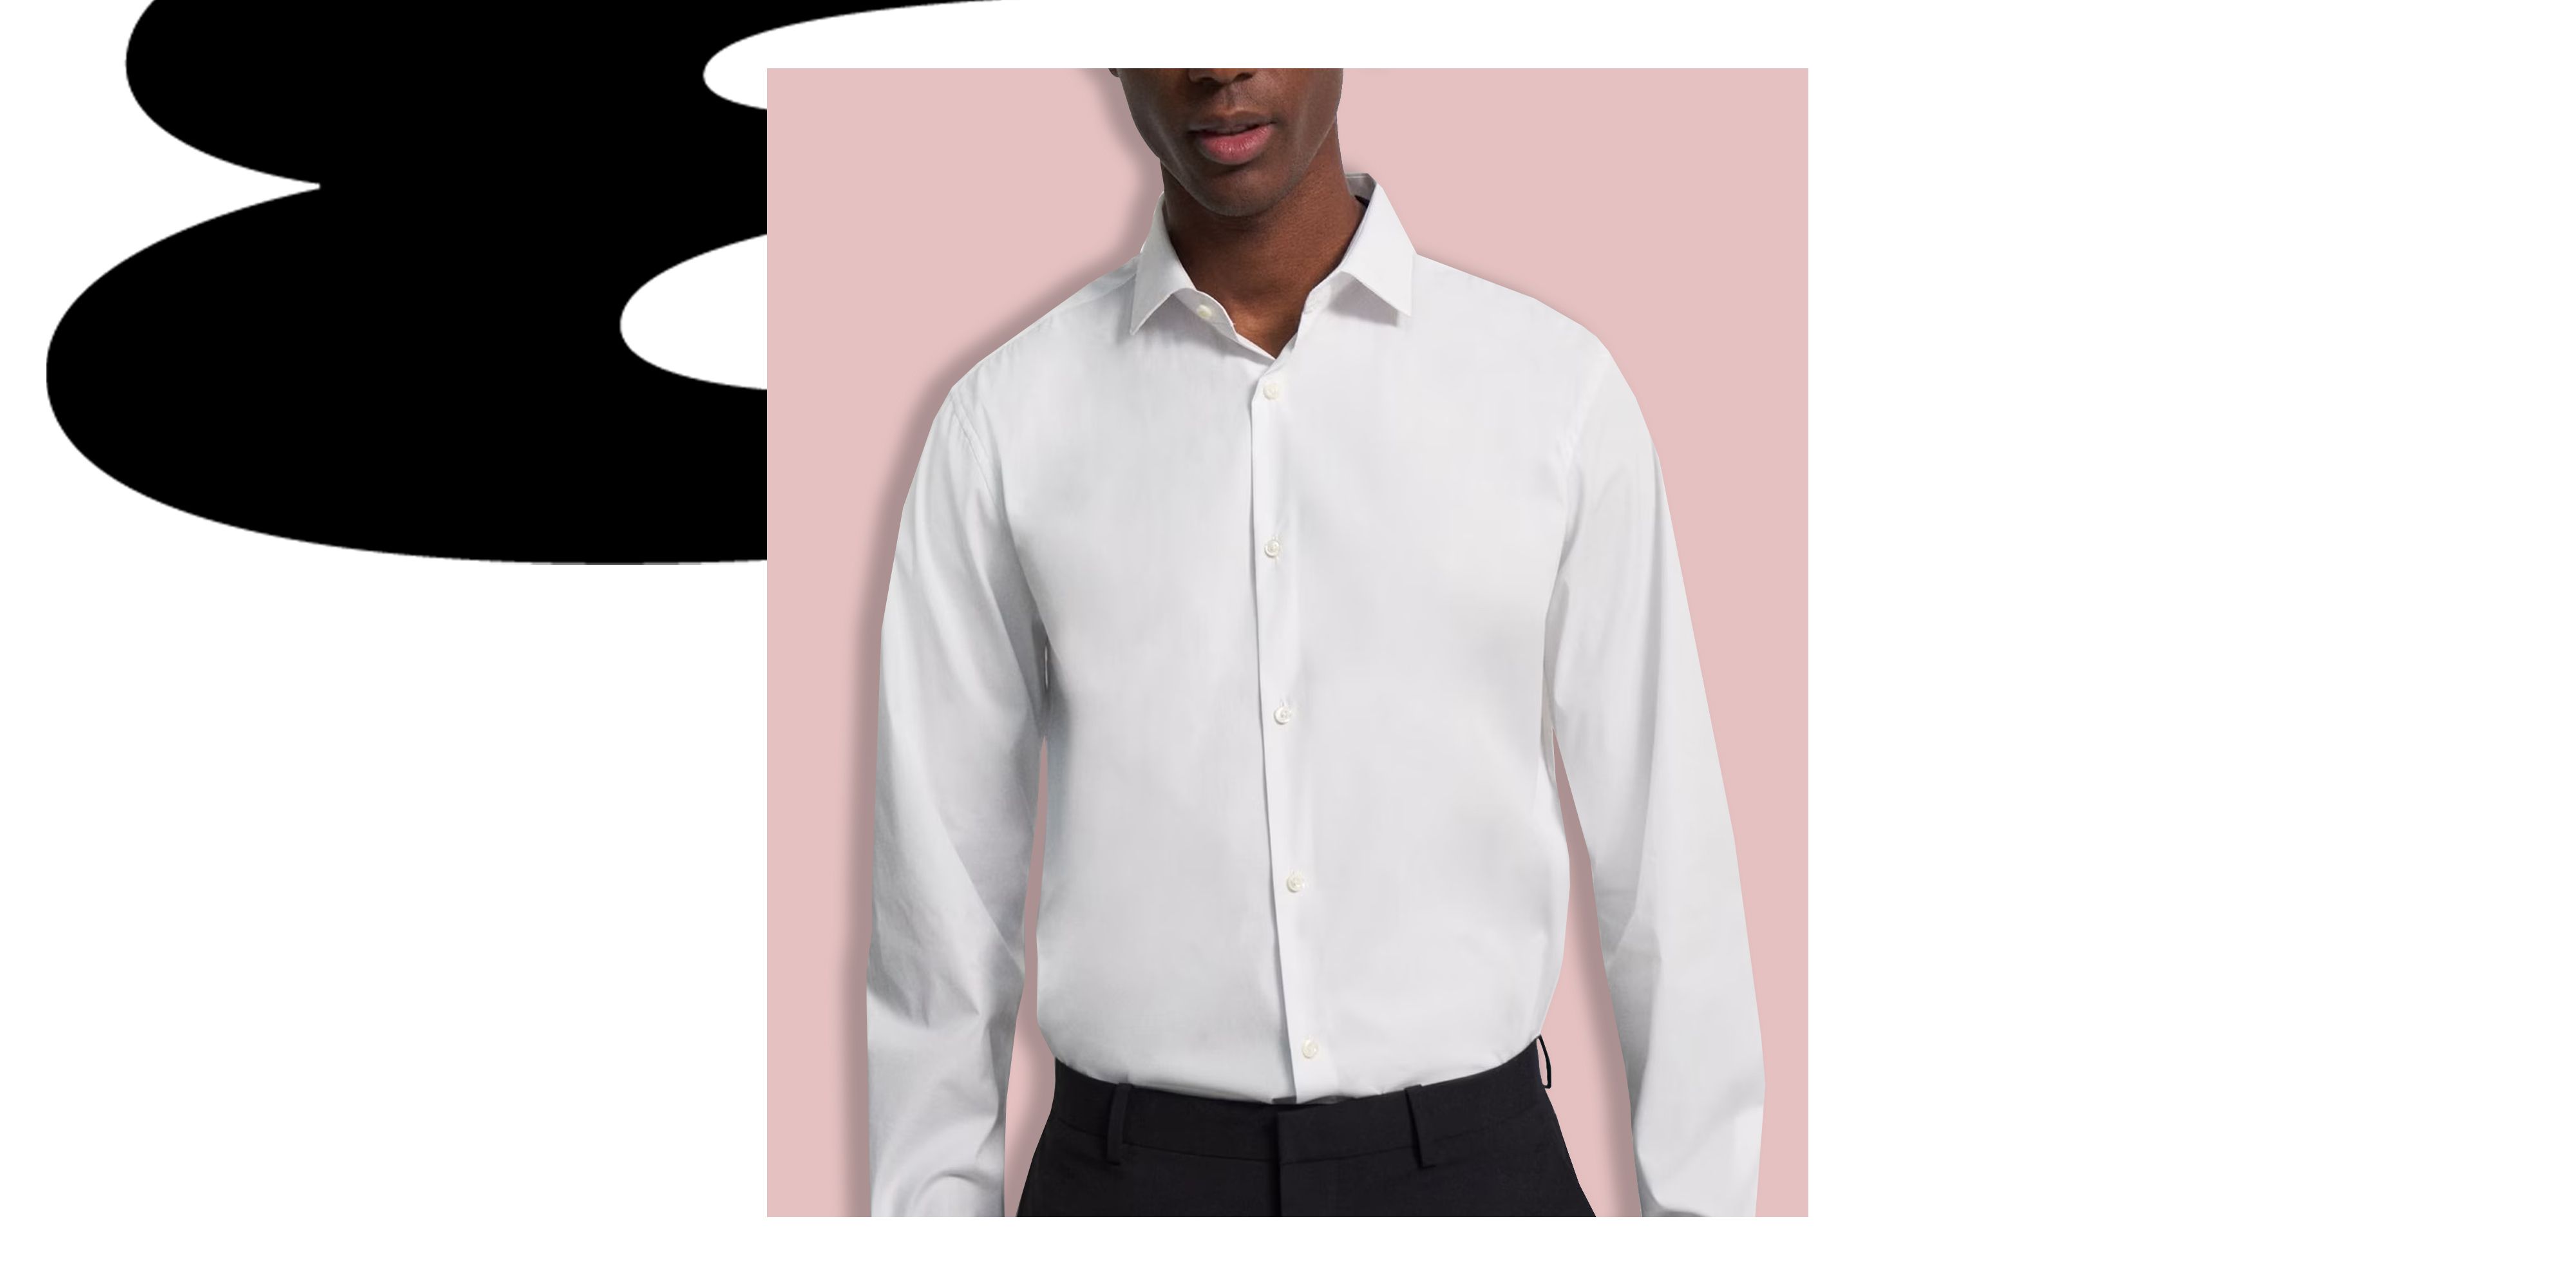 Not Your Basic White Shirt - WhiteTie Blouse